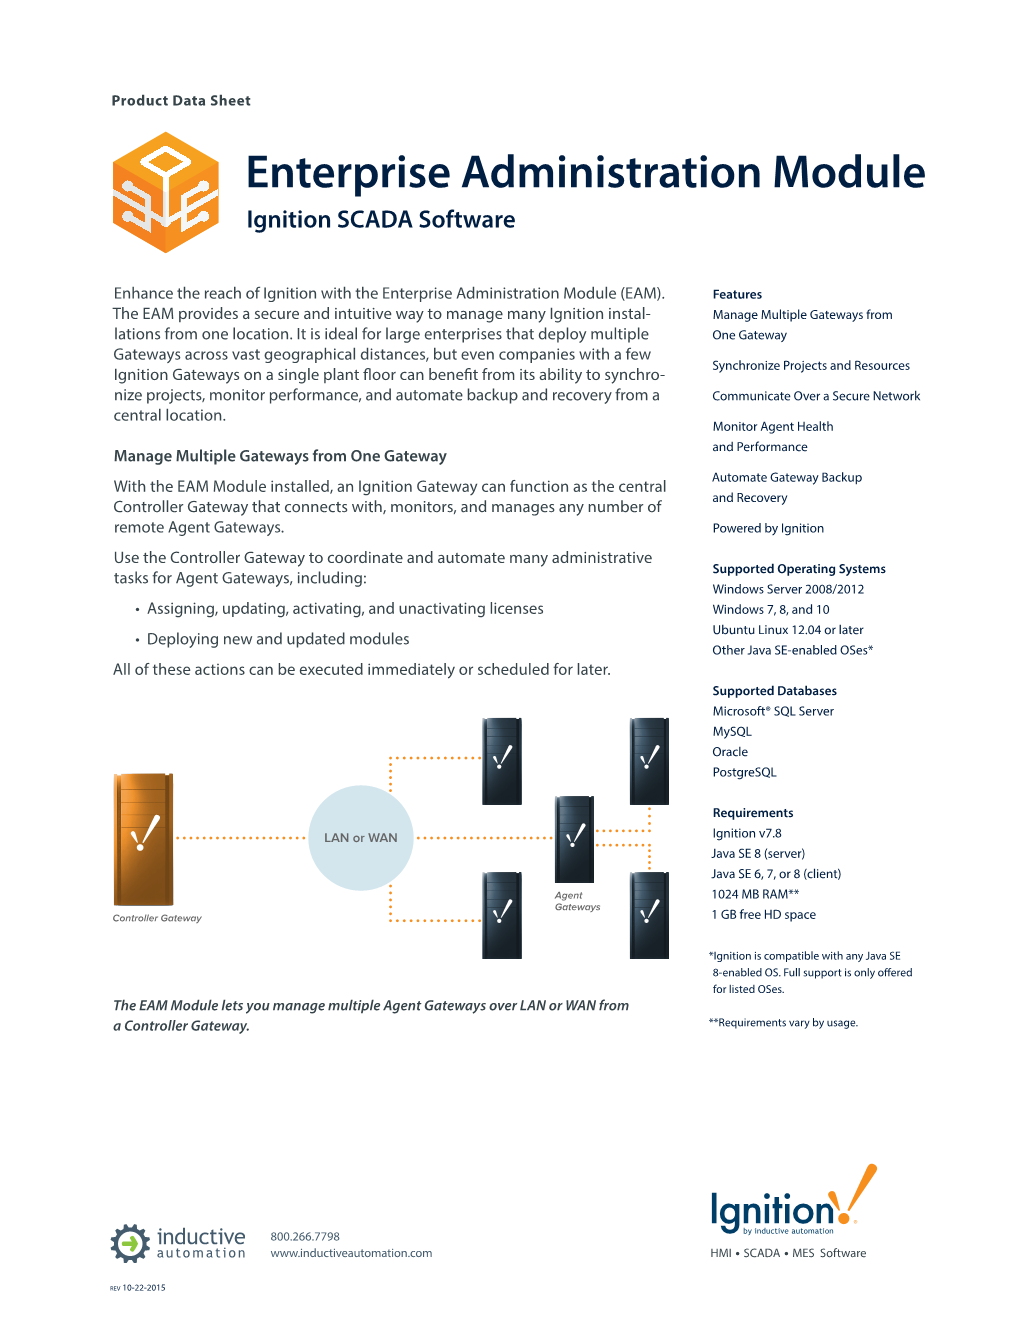 Enterprise Administration Module Ignition SCADA Software